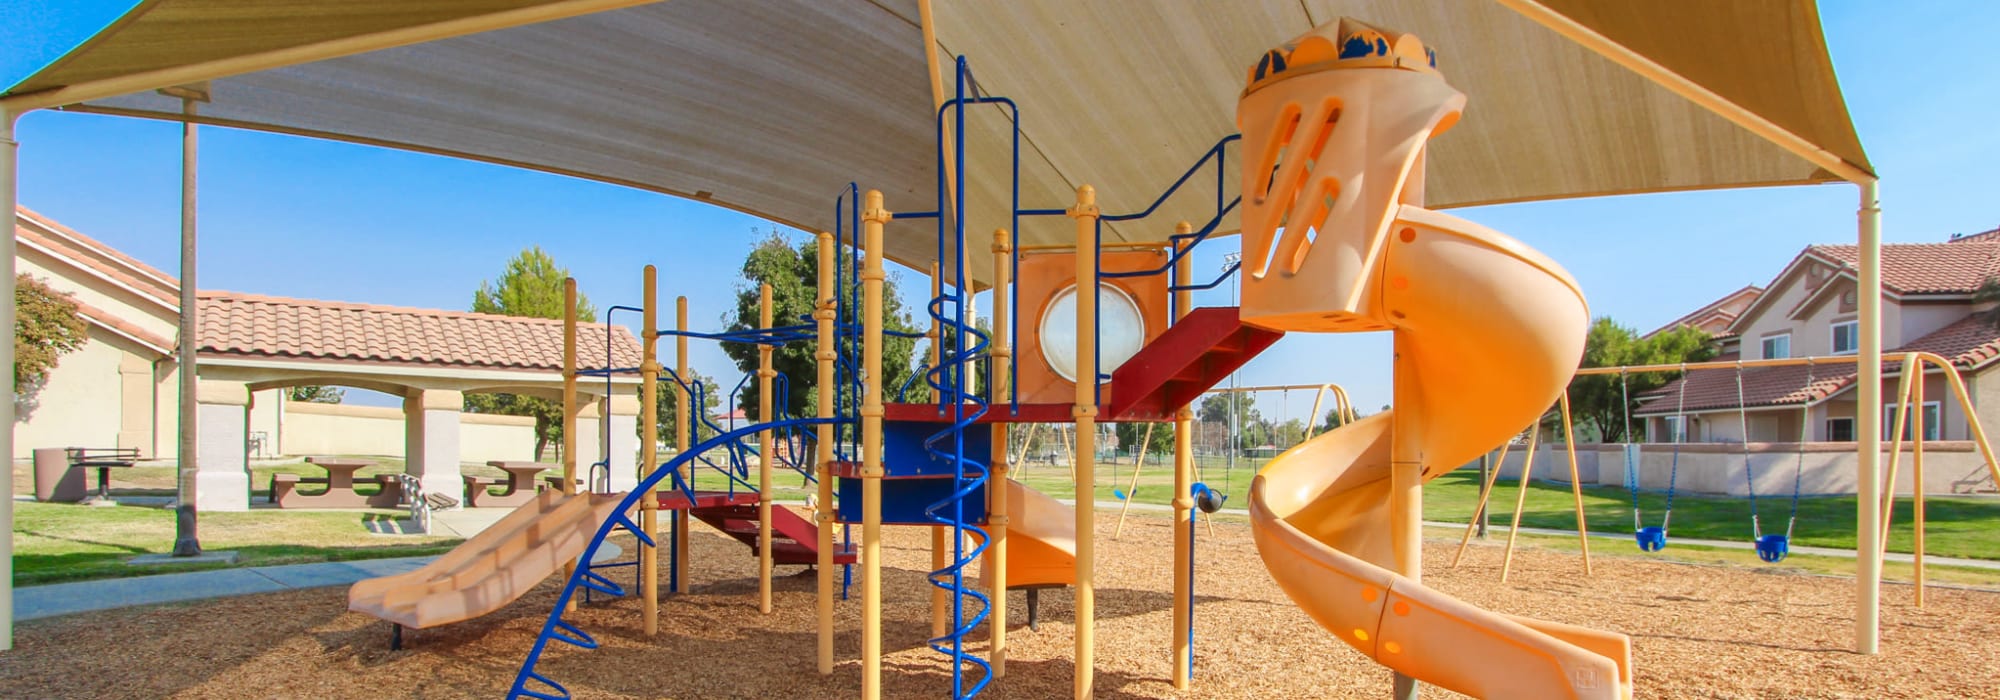 A playground at Lemoore (NAS) in Lemoore, California